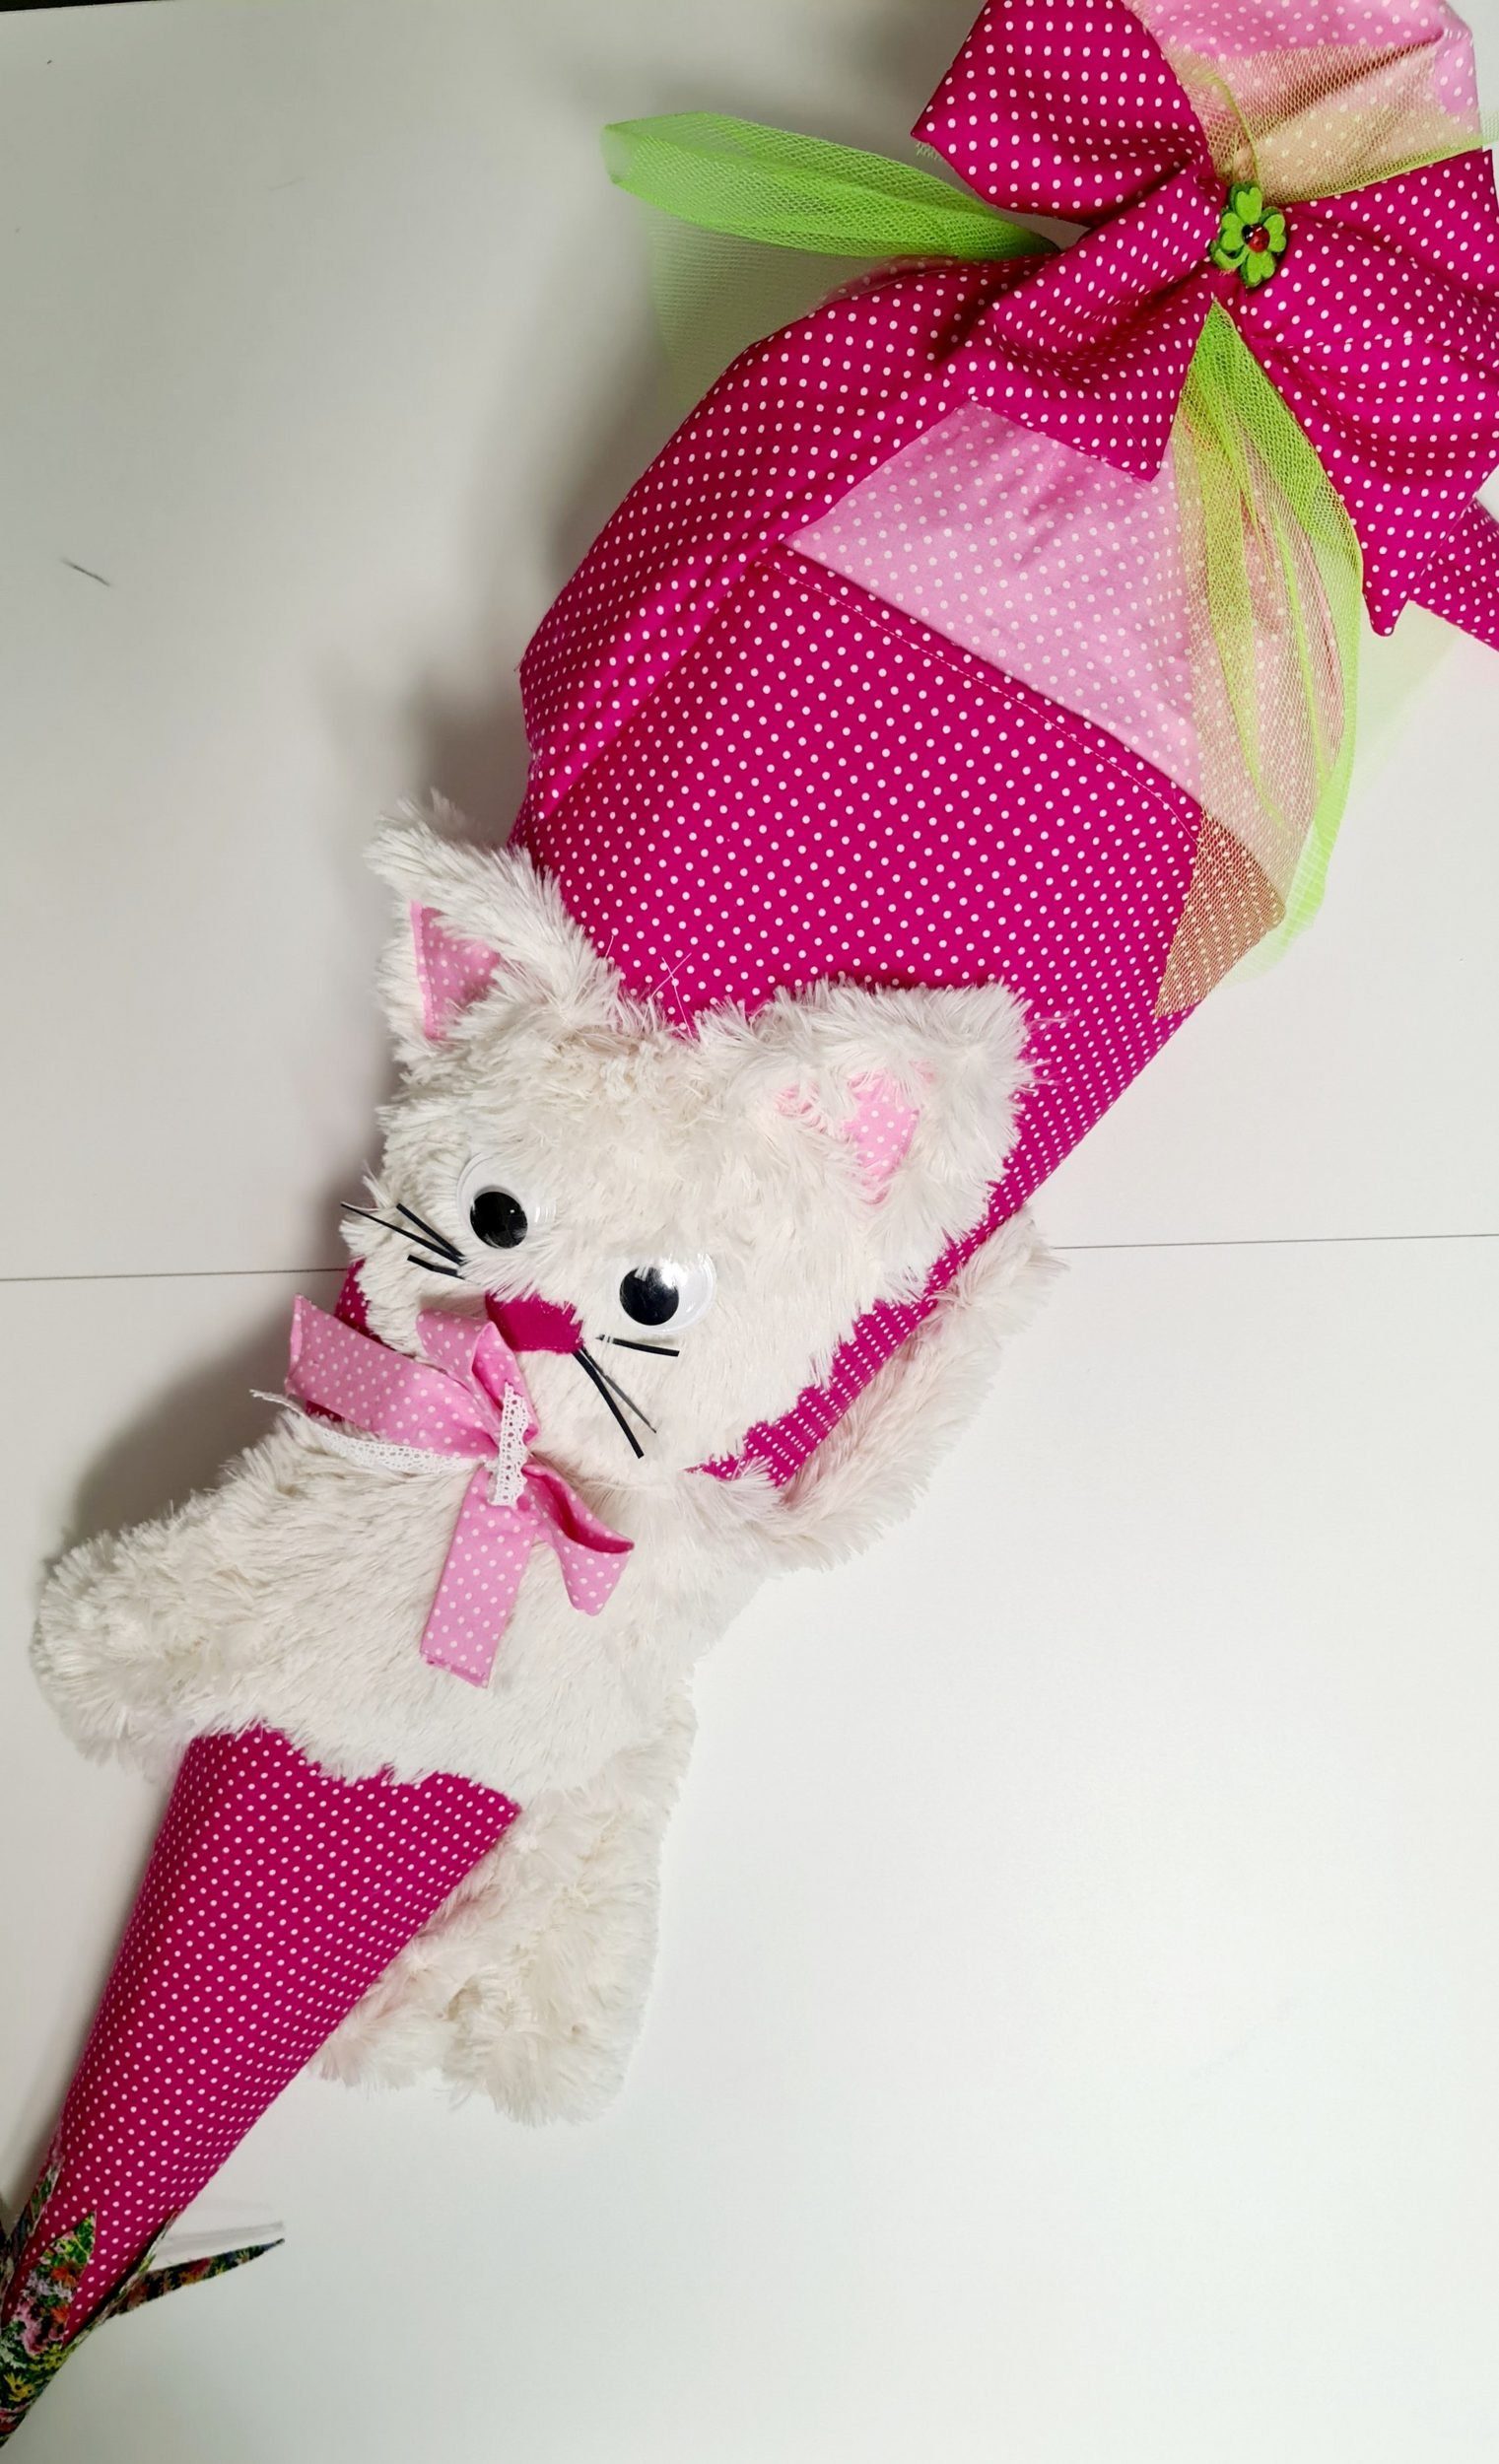 Schultüte – Welt kreativ Kitthy Katze Hobby Schultüte Schultüte Fertig genähte